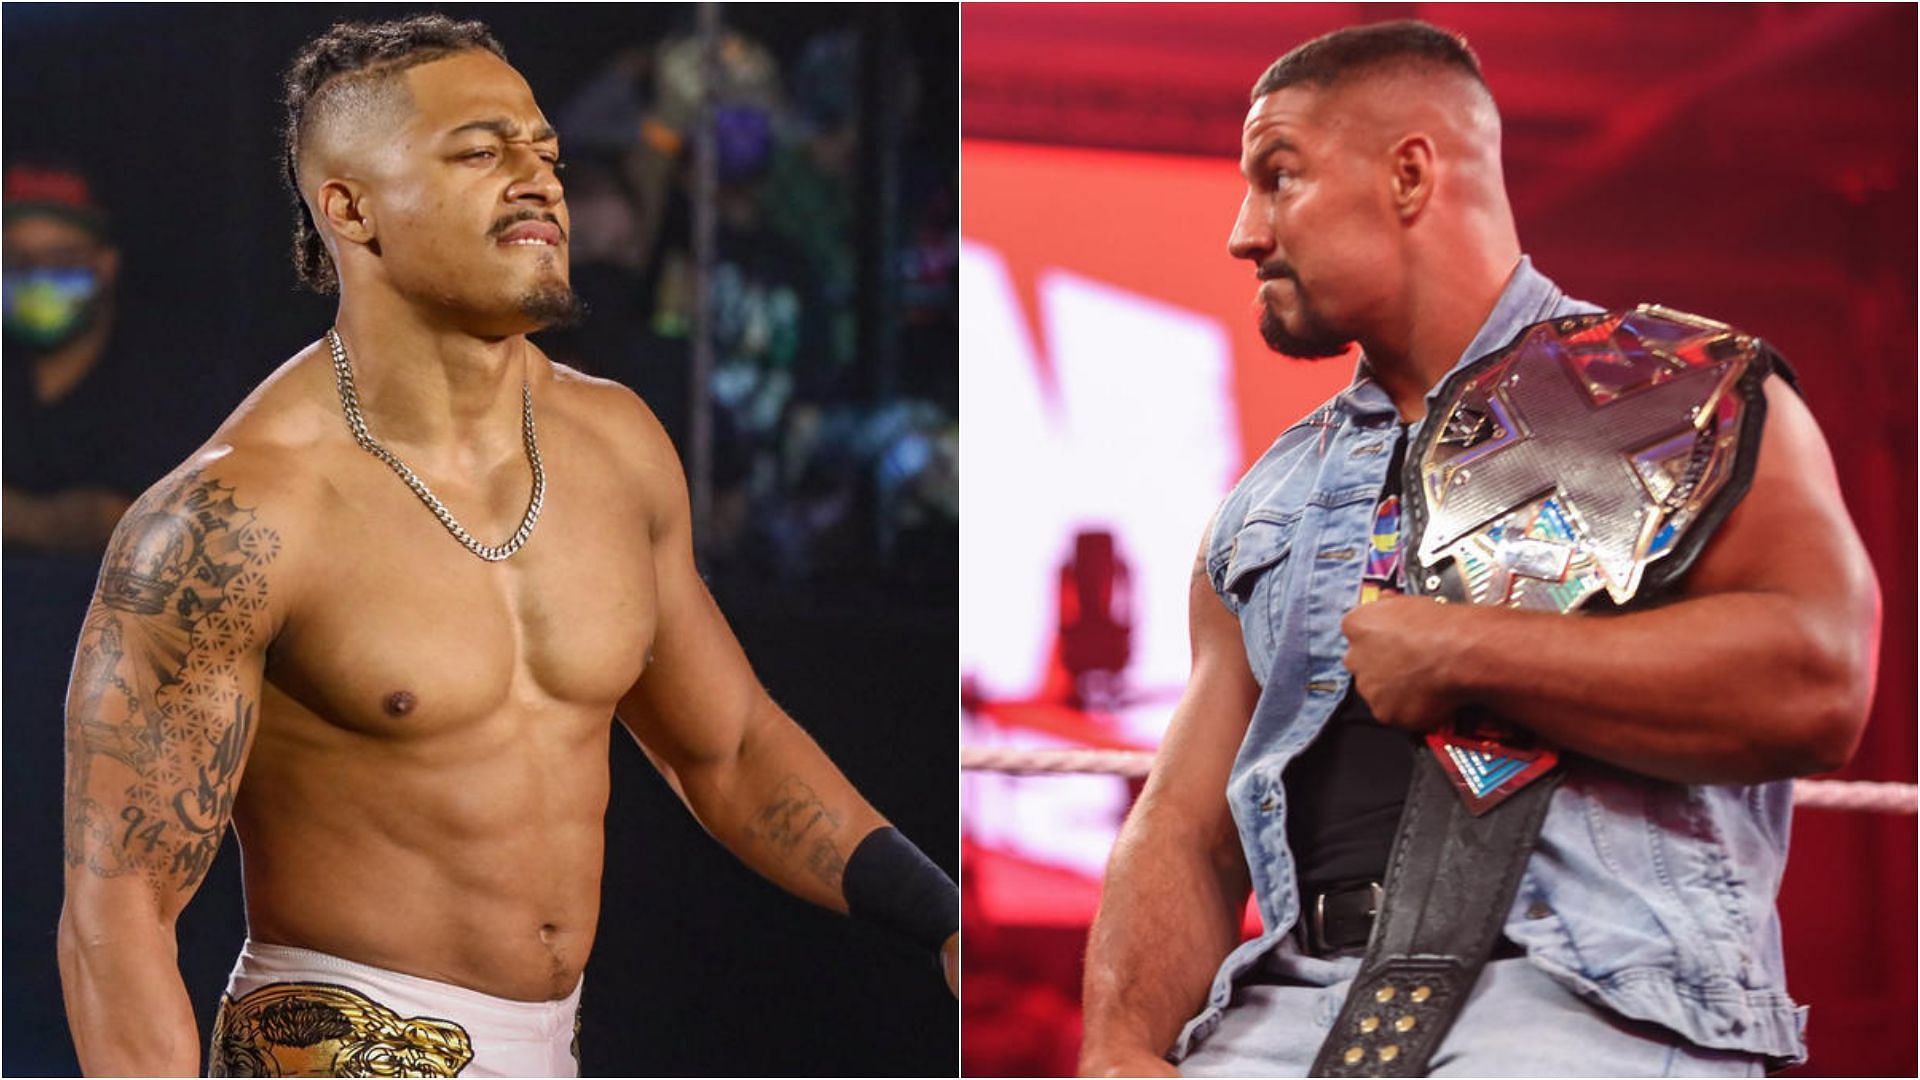 Bron vs Melo: NXT&#039;s biggest money feud